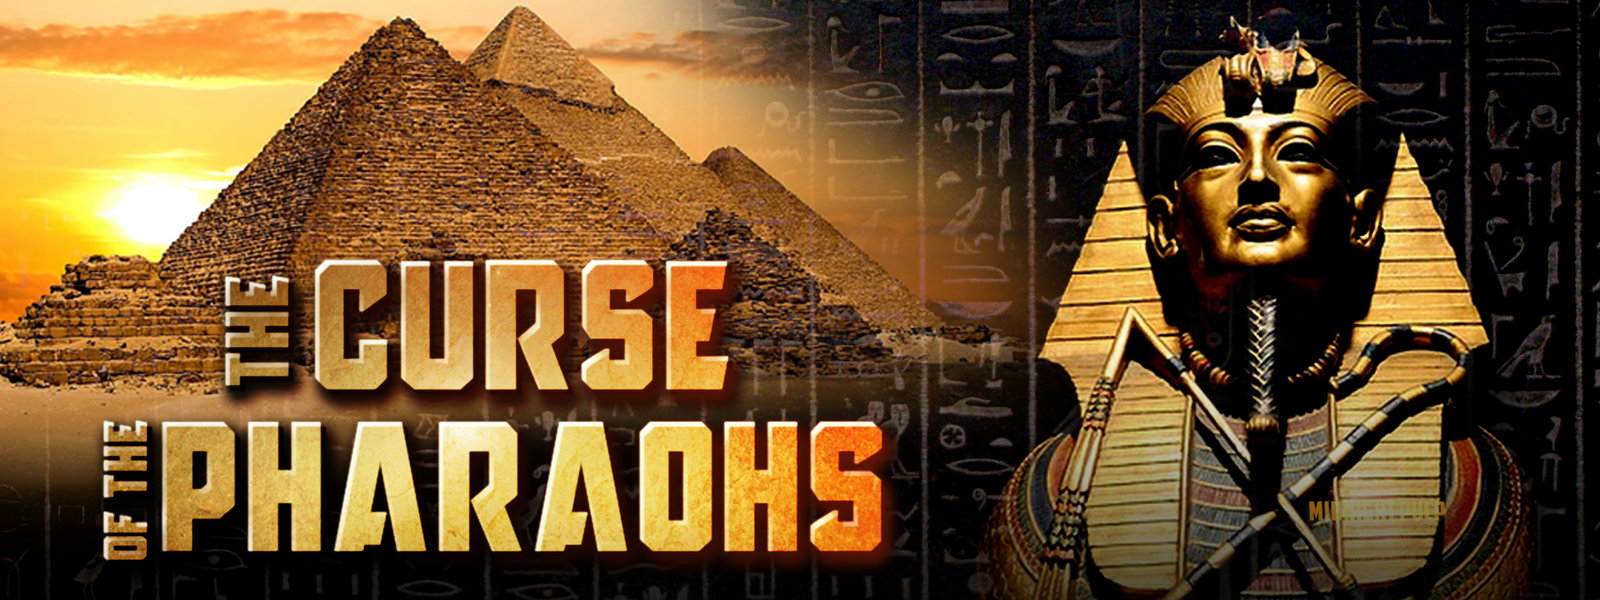 curse of the pharaohs book